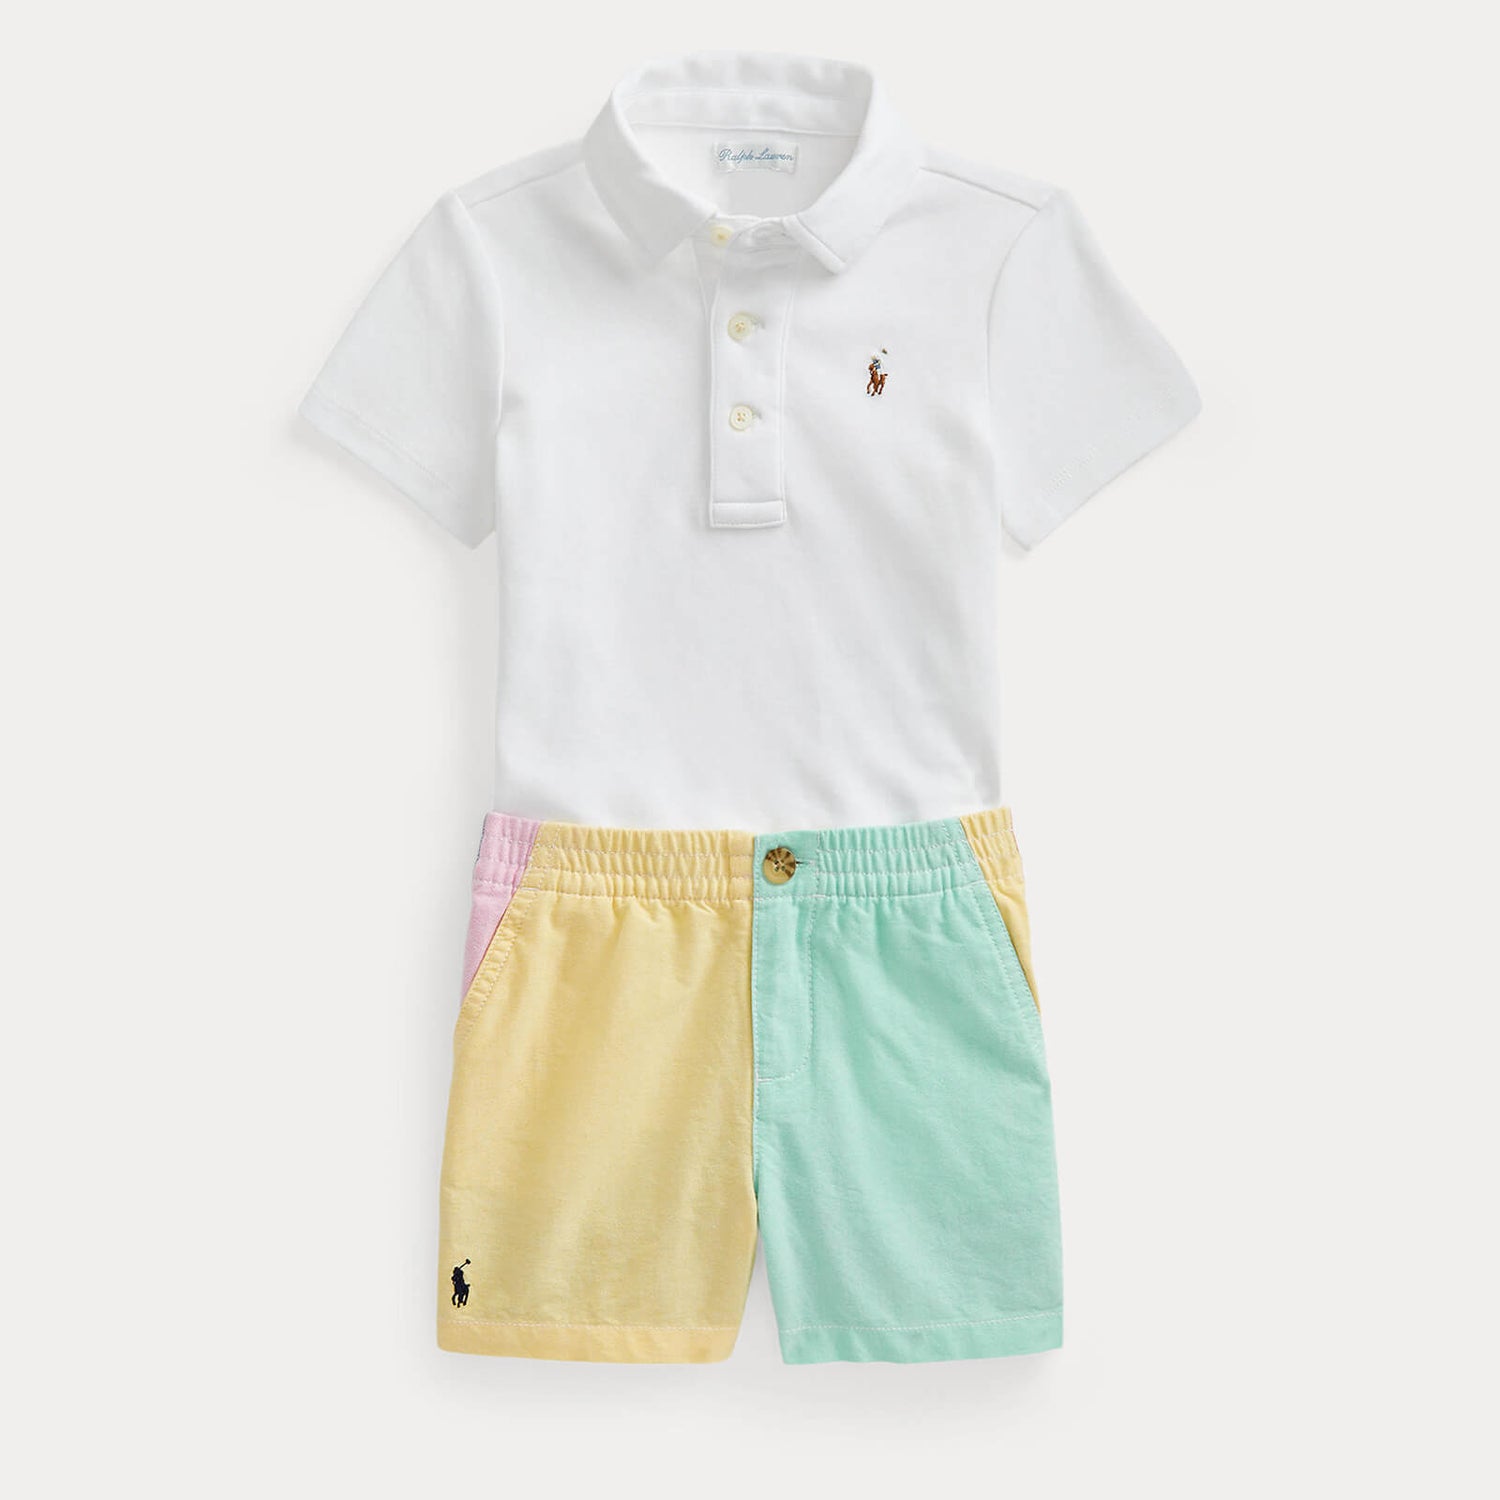 Ralph Lauren Baby T-Shirt and Shorts Set - White - 6-9 months